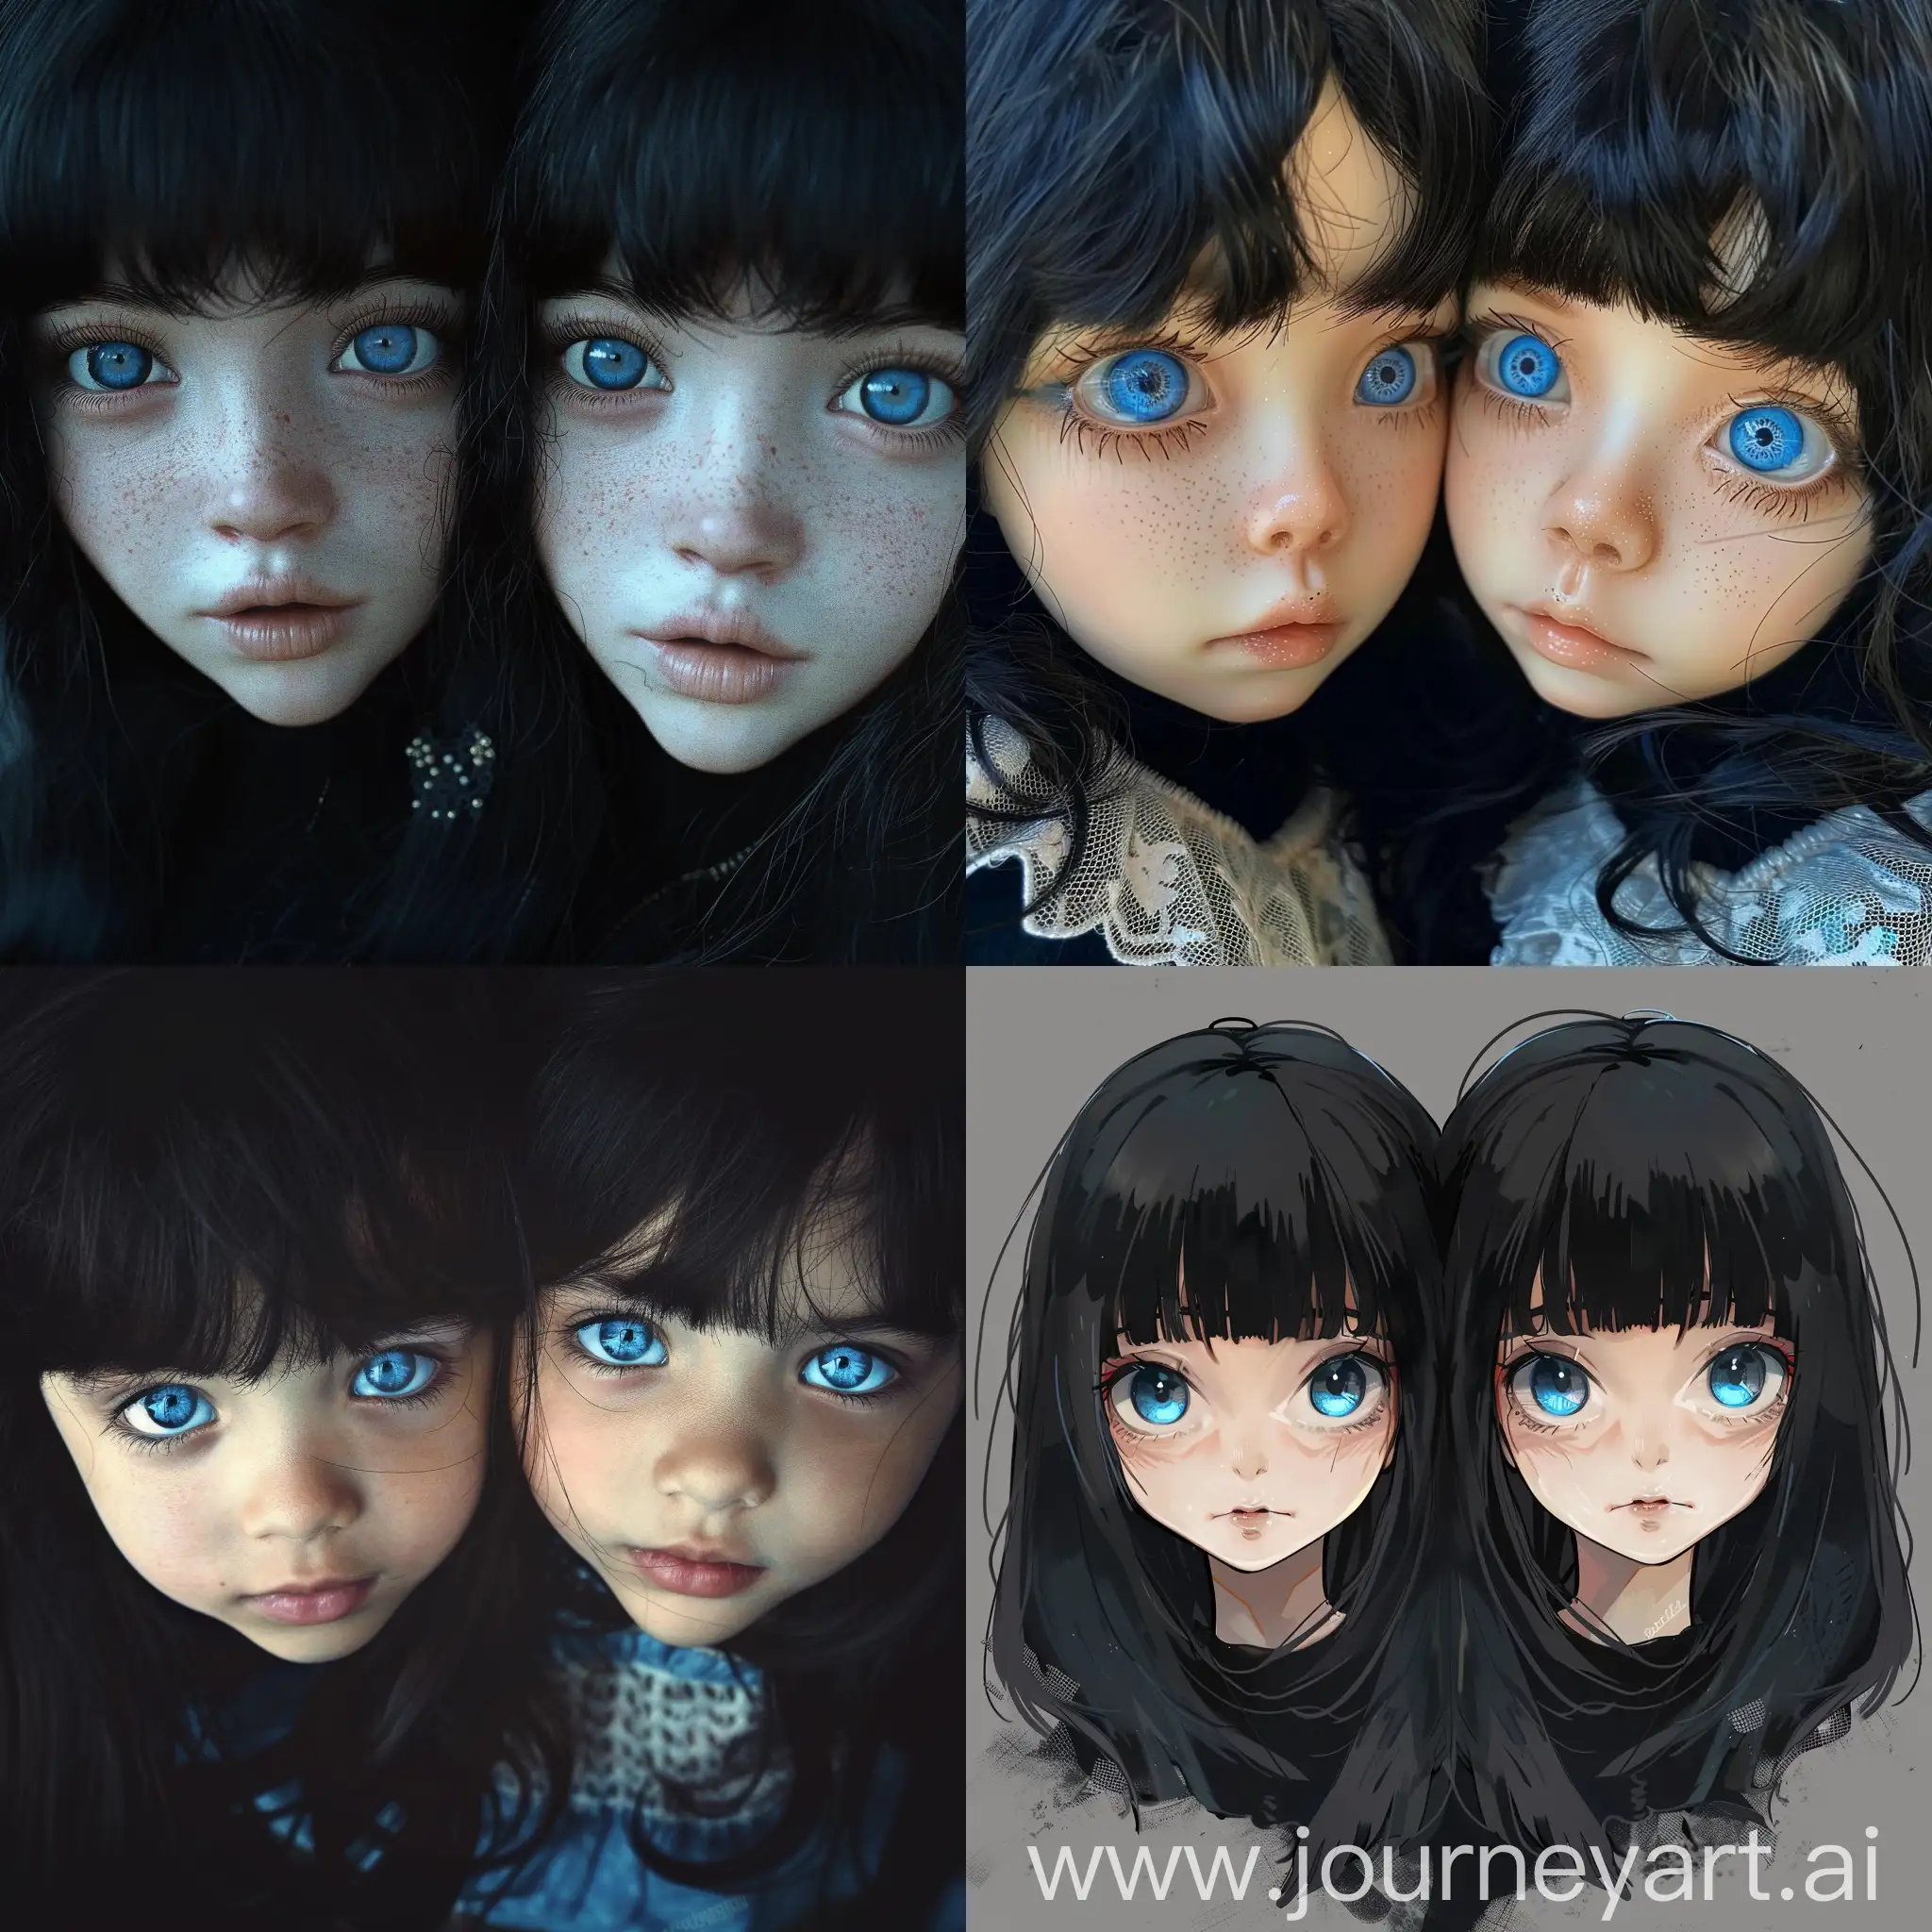 dos gemelos de pelo negro y ojos azules